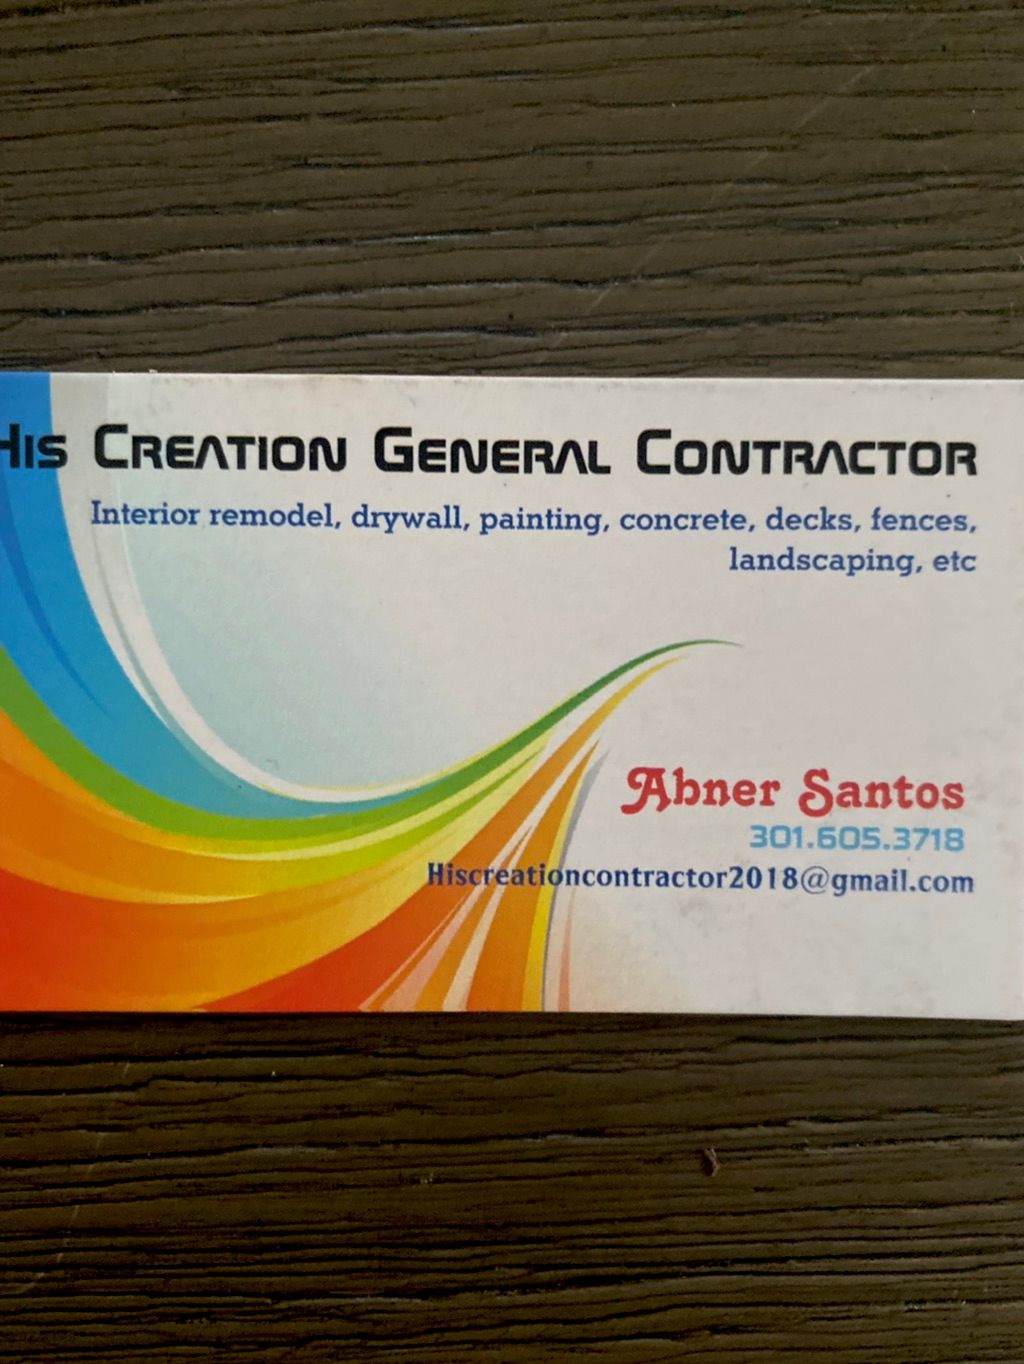 His Creation General Contractor Inc.